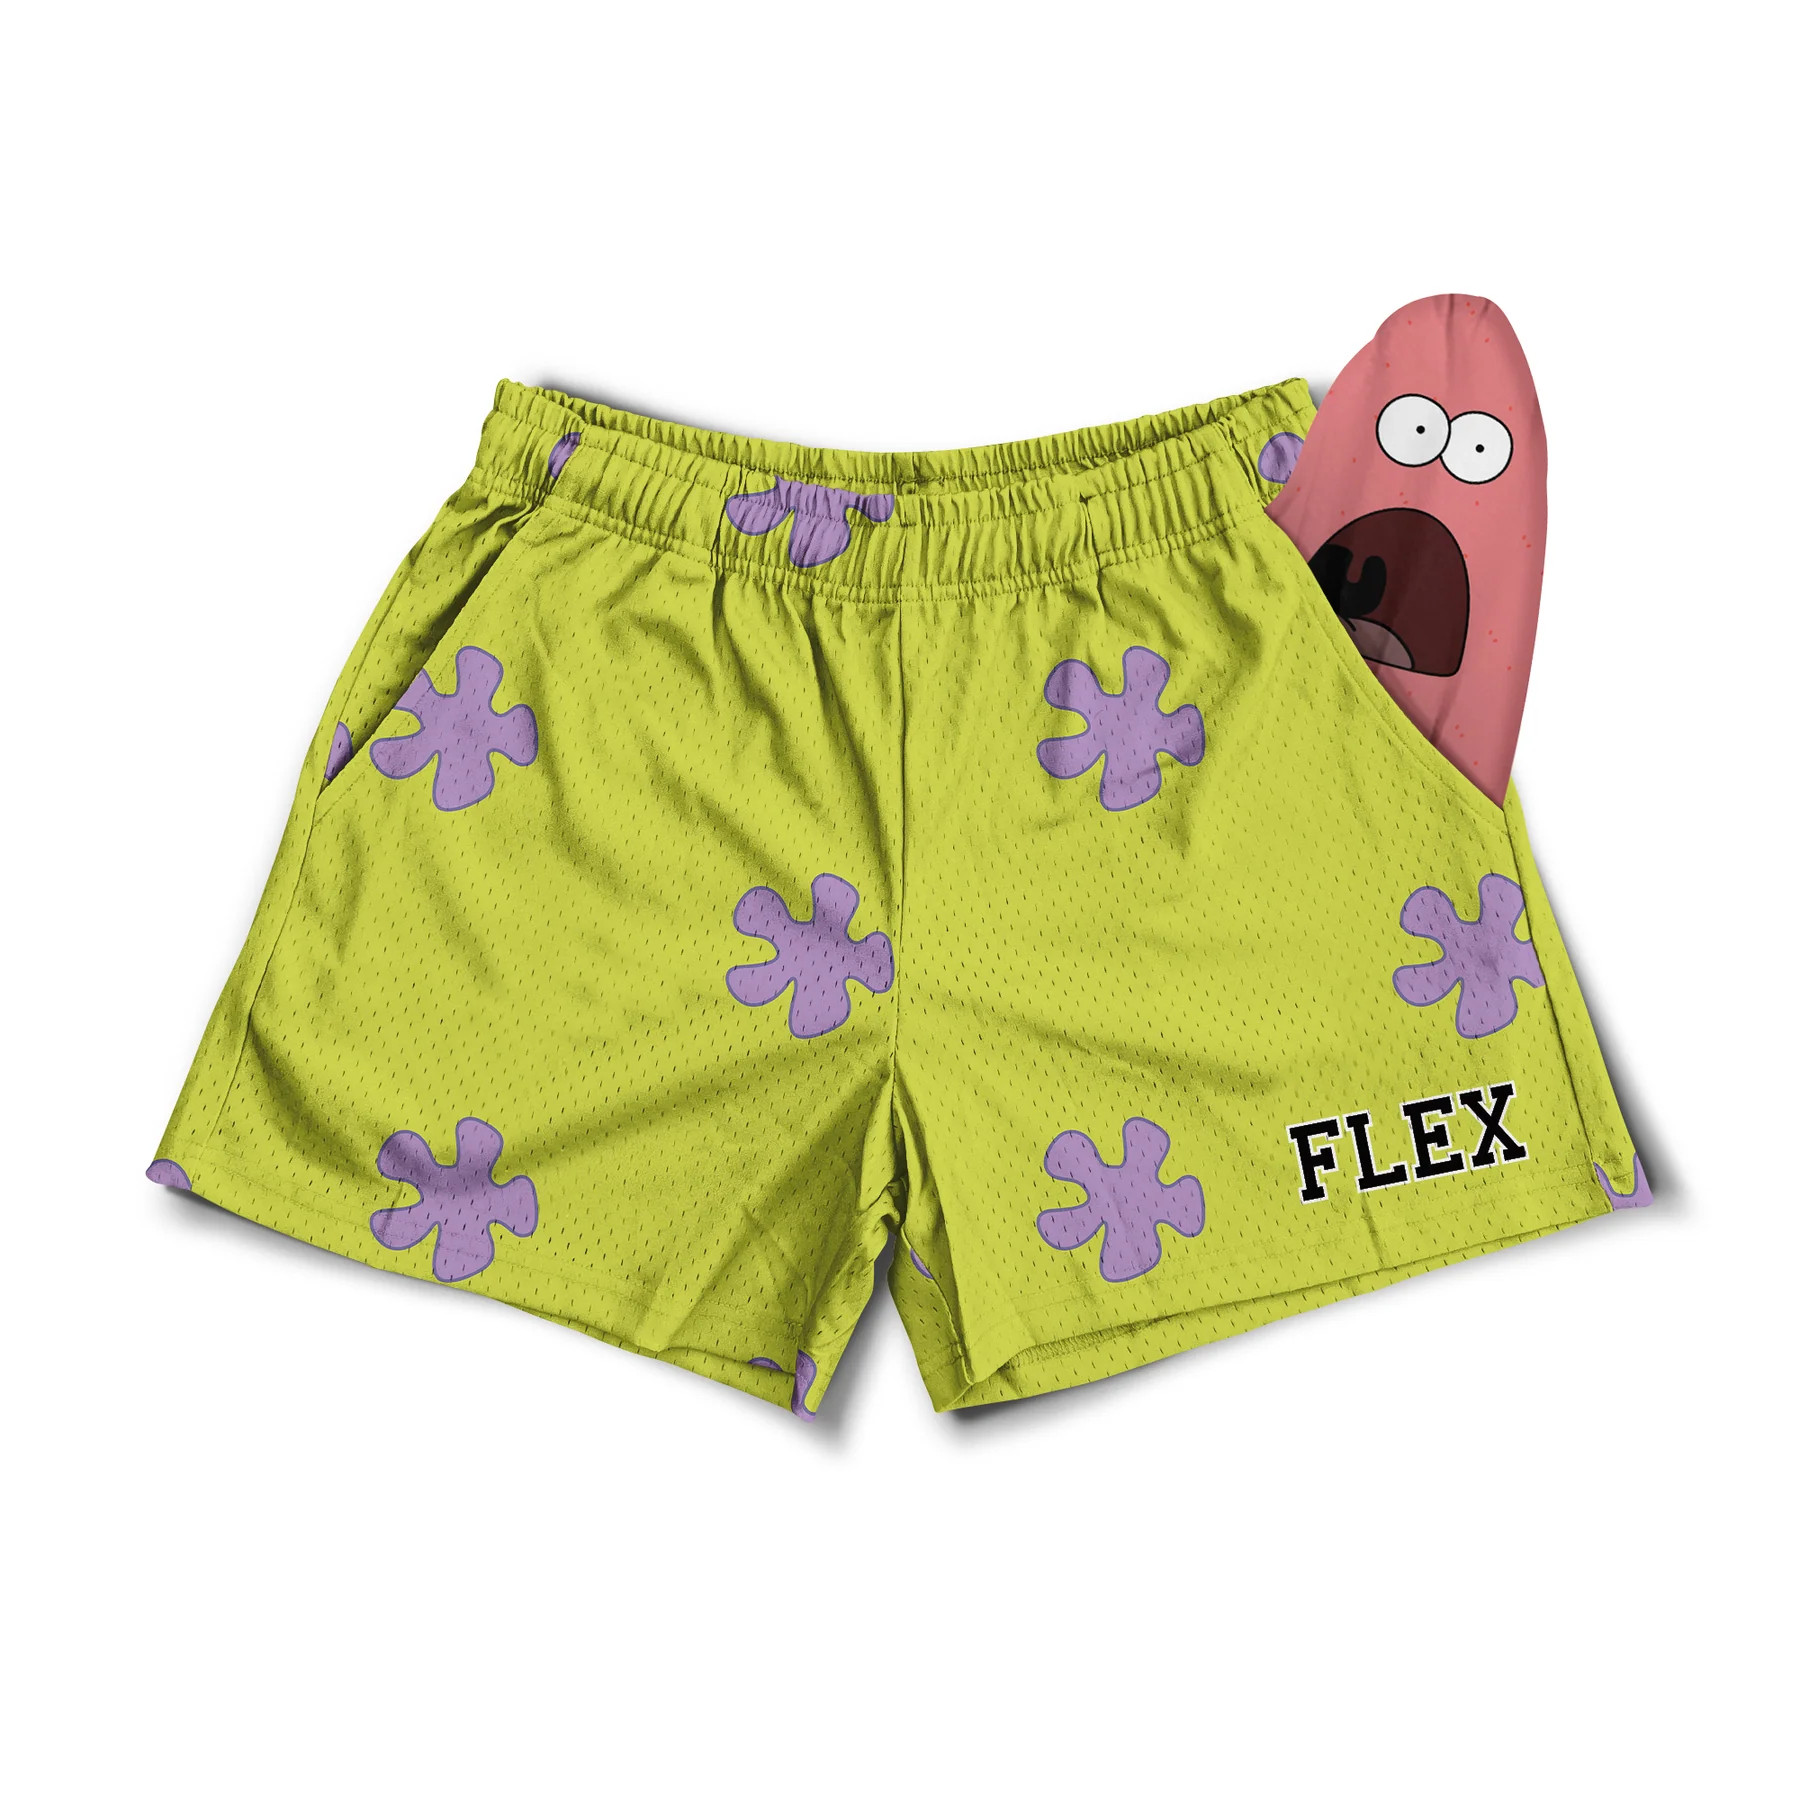 flexliving shorts